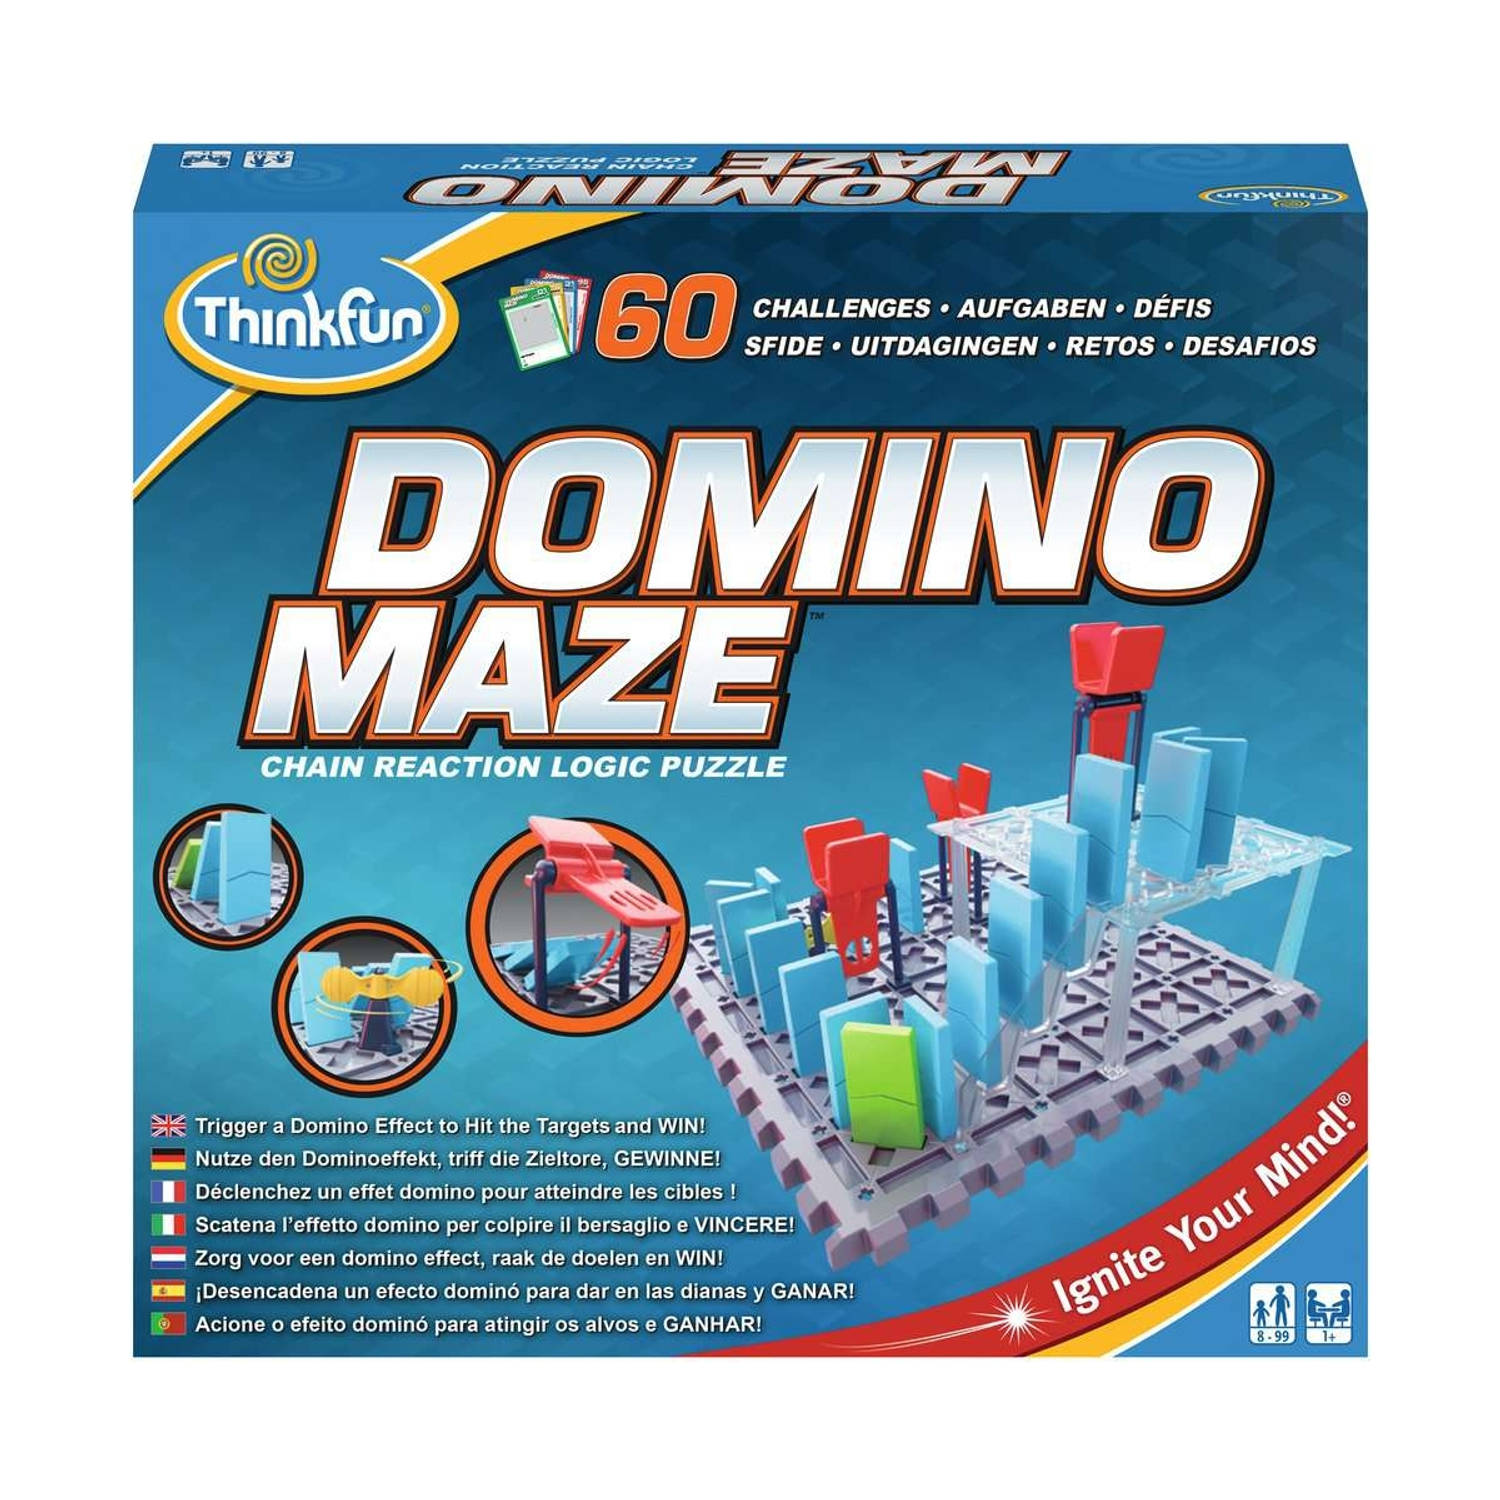 Thinkfun Domino maze